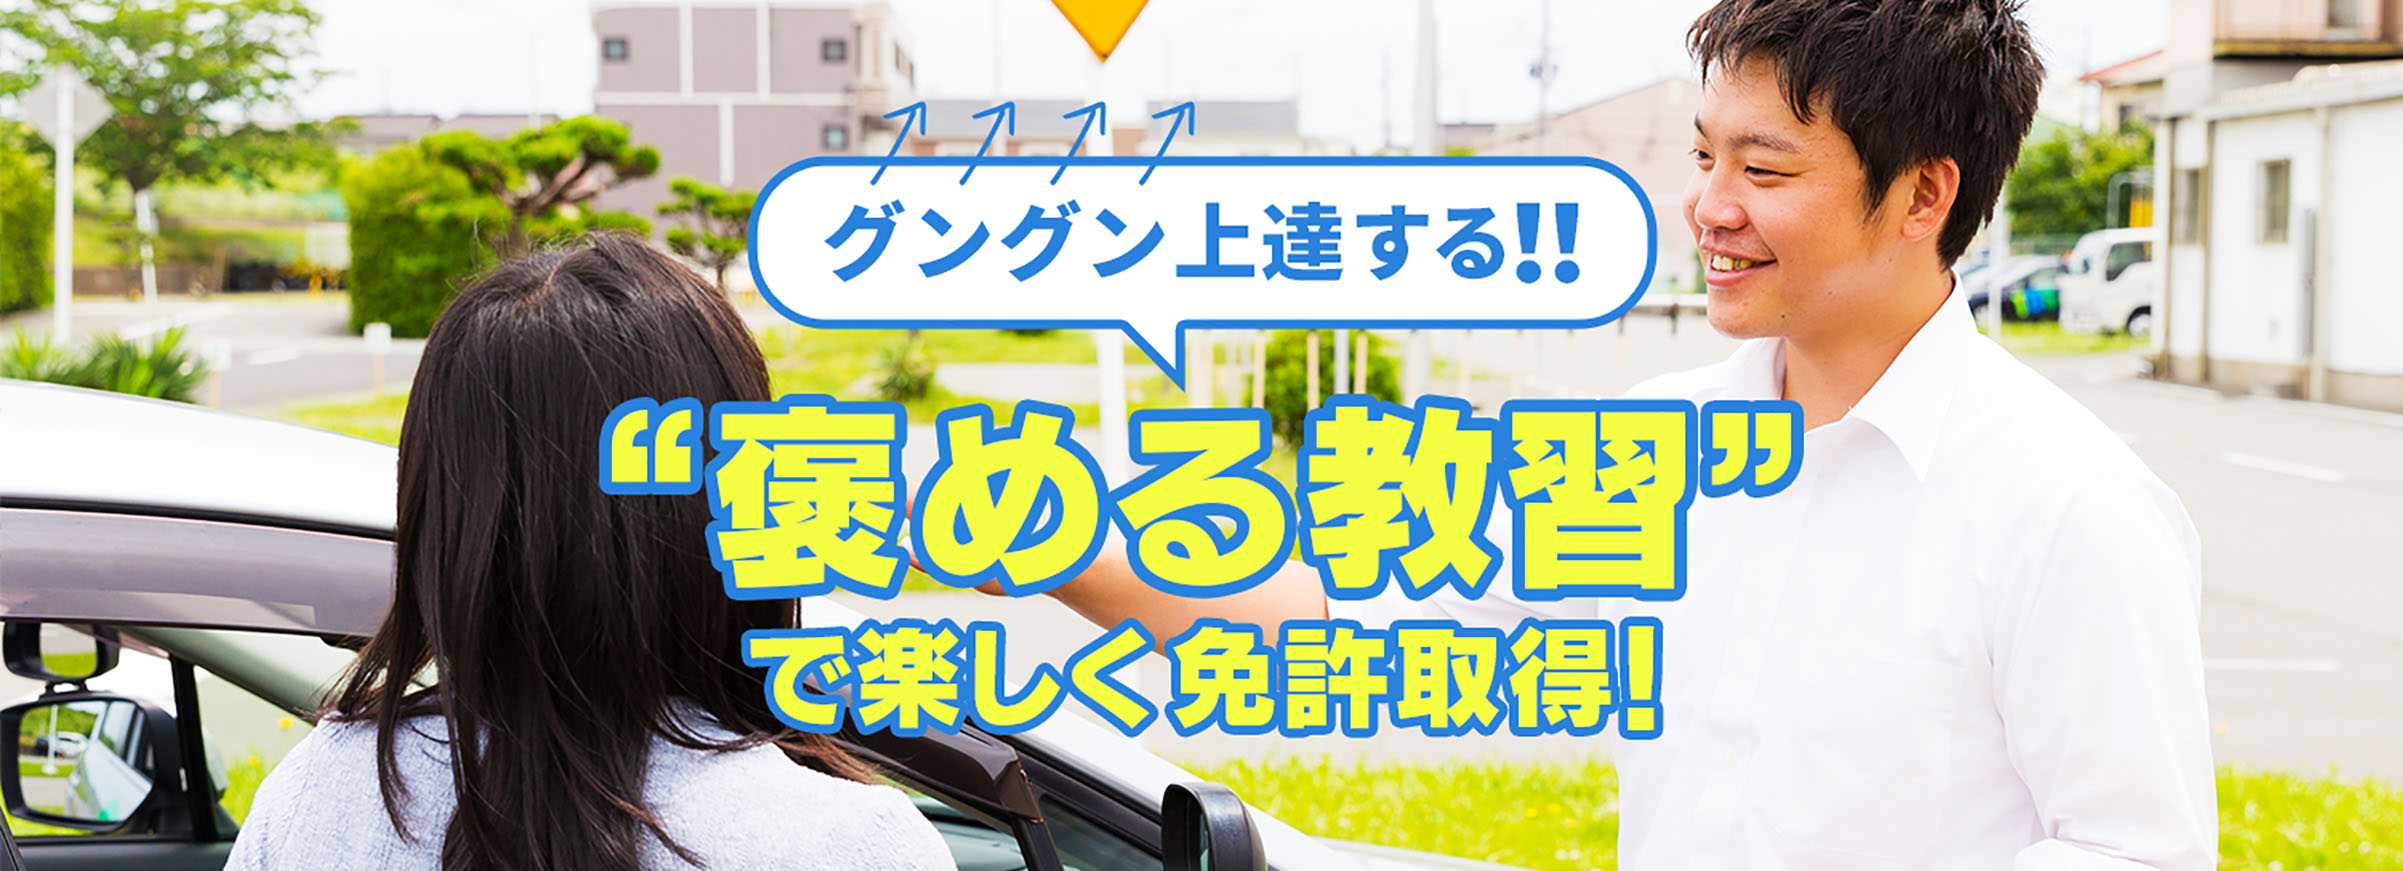 Pids ポートアイランドドライビングスクール 神戸市で運転免許取得なら安心の自動車学校 教習所